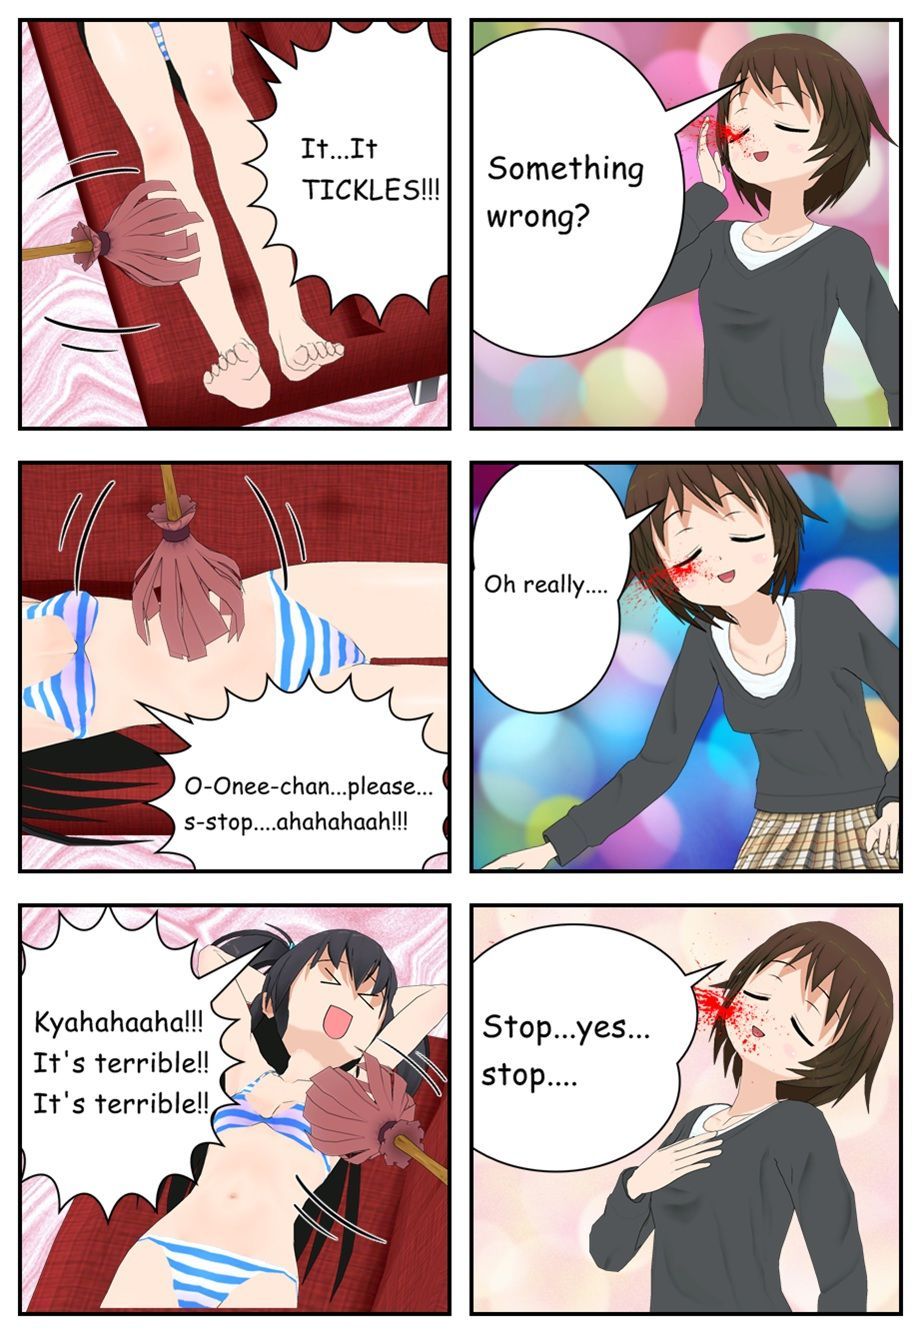 [Screamer] Onee-chan is a perv!